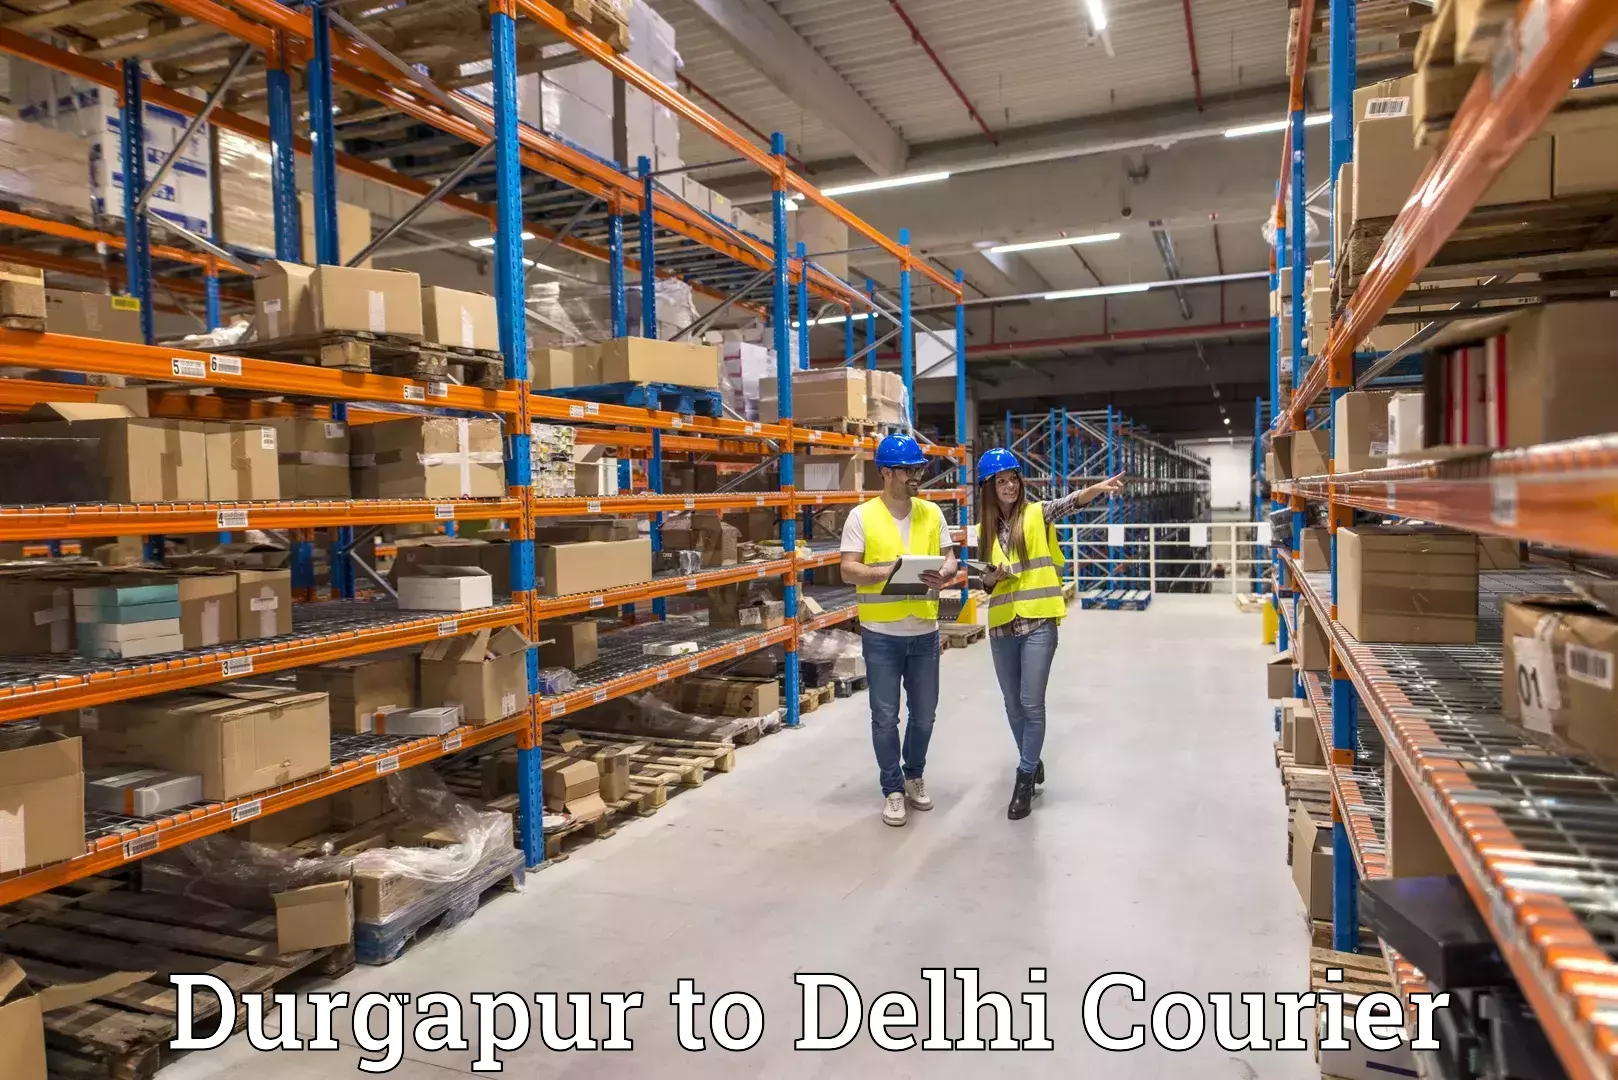 Delivery service partnership Durgapur to Delhi